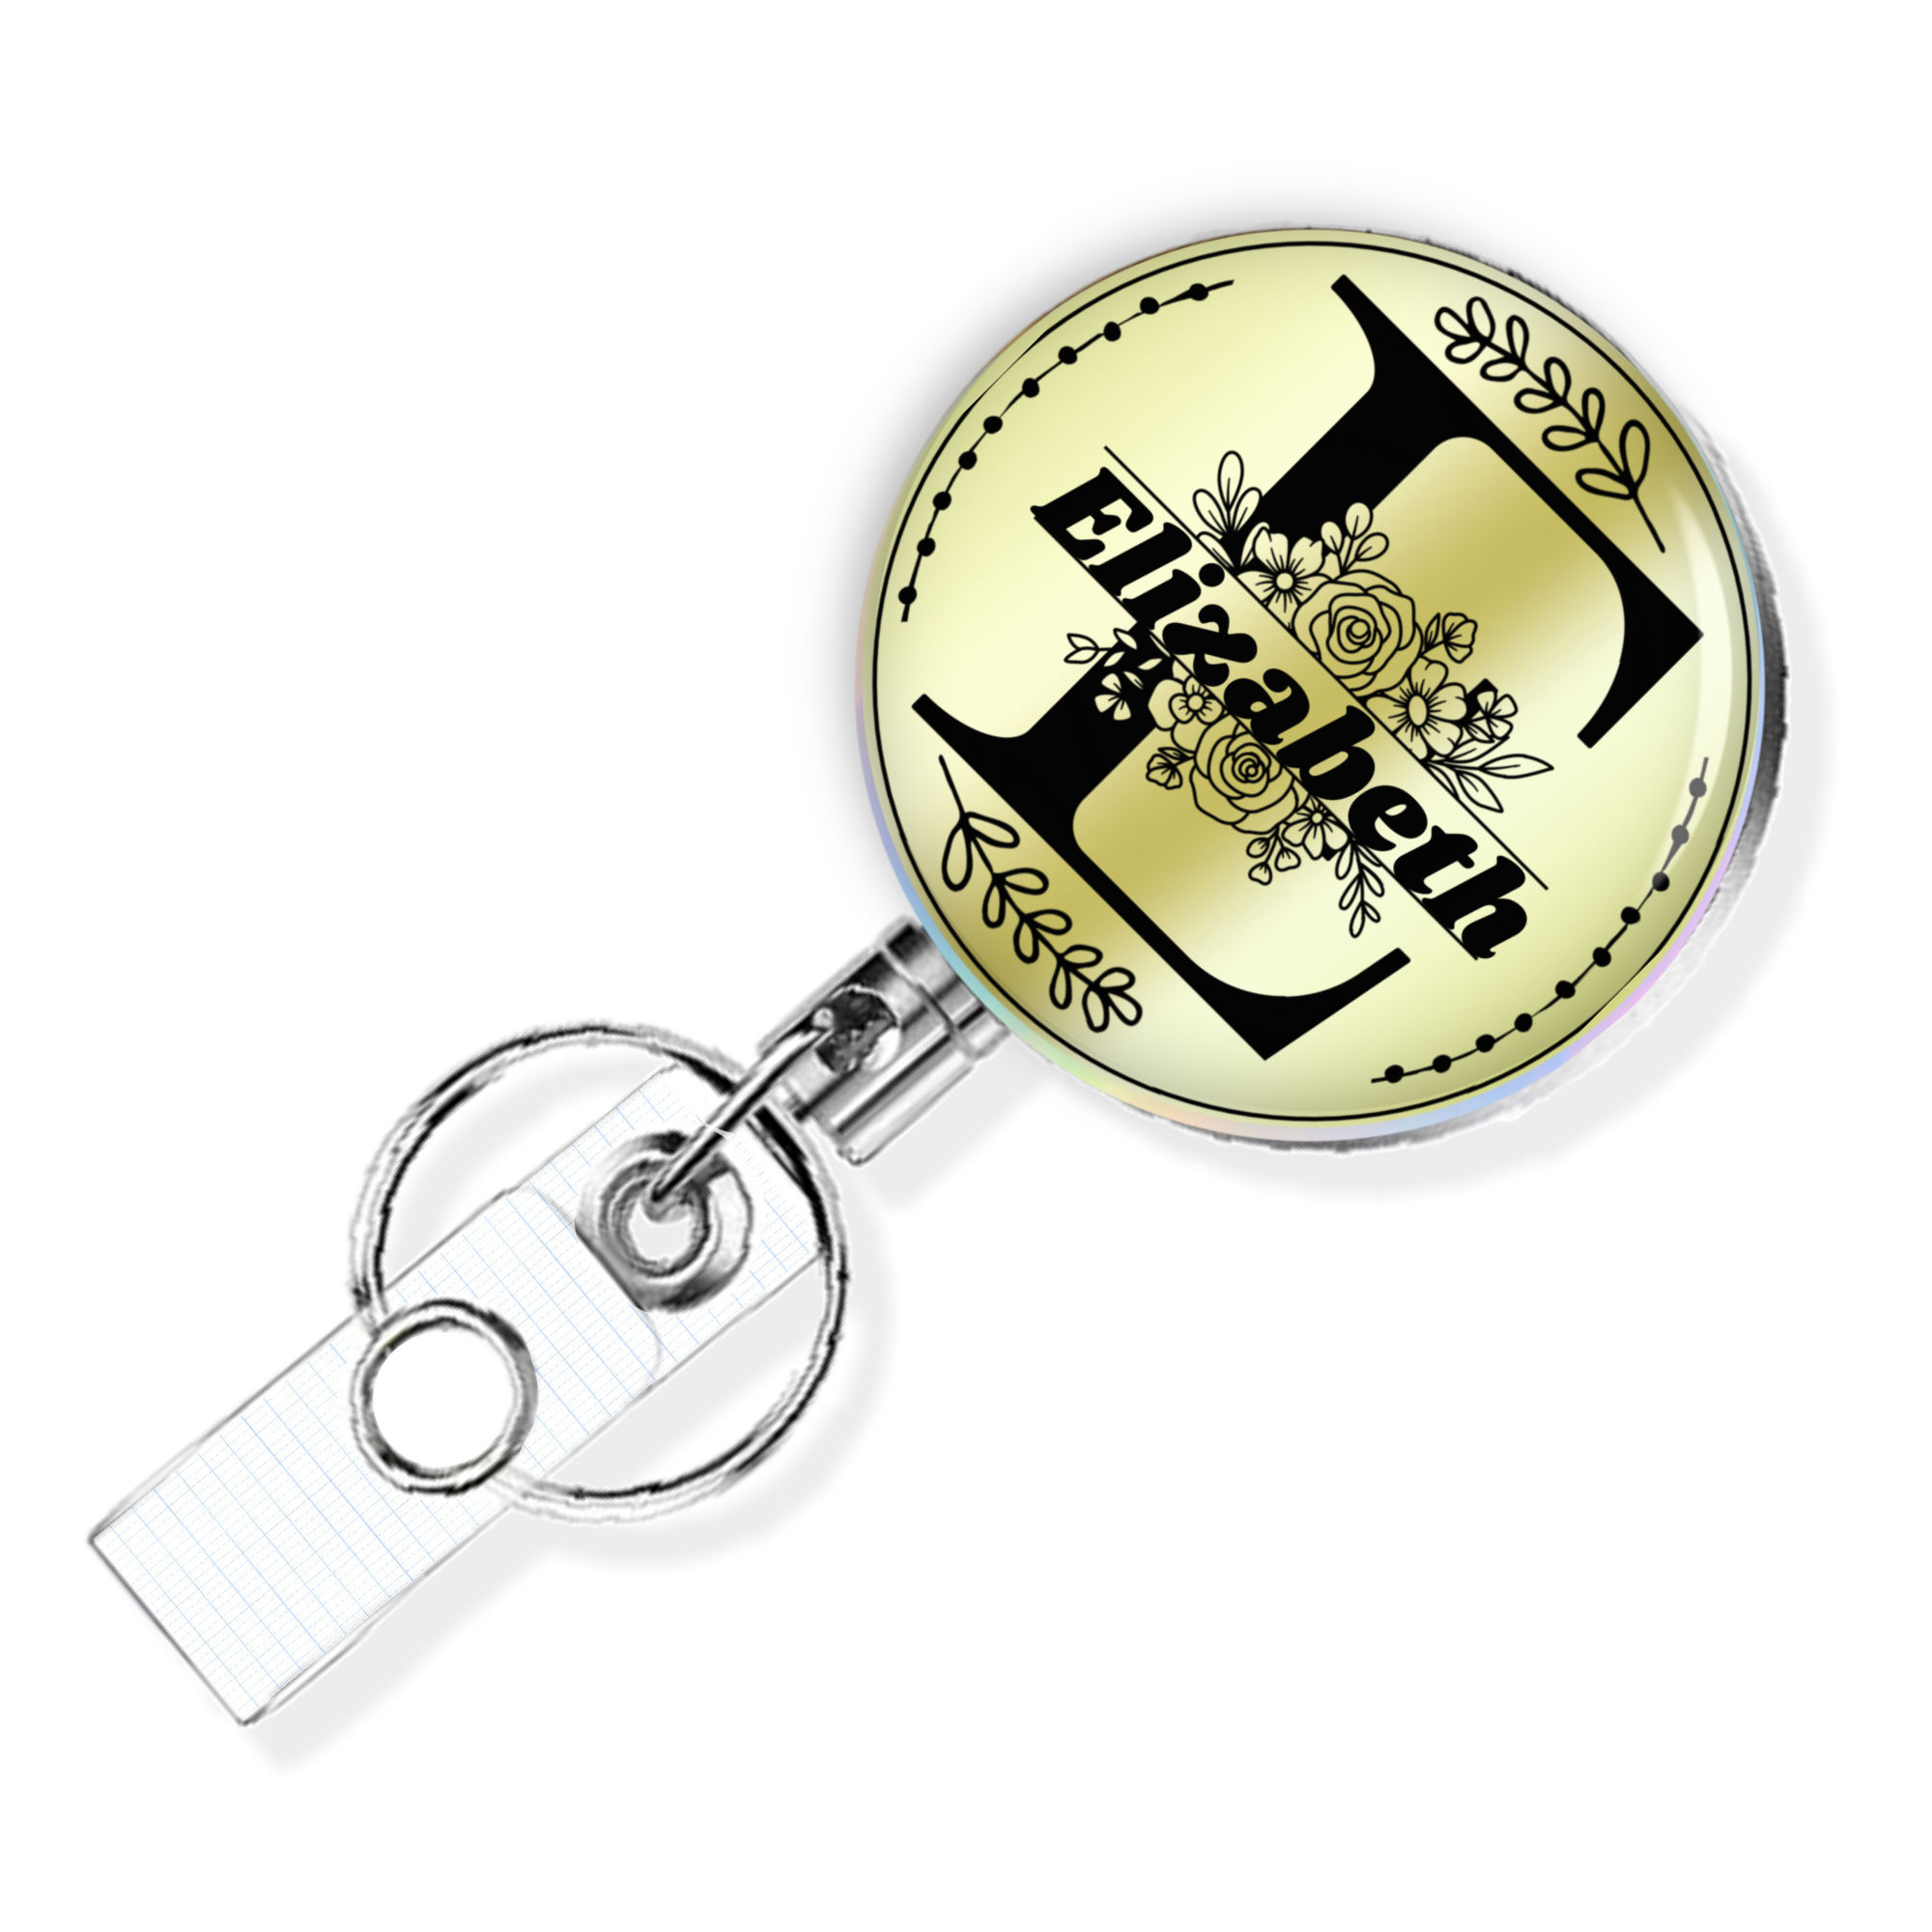 Personalized initial badge reel, wedding monogram key holder gift